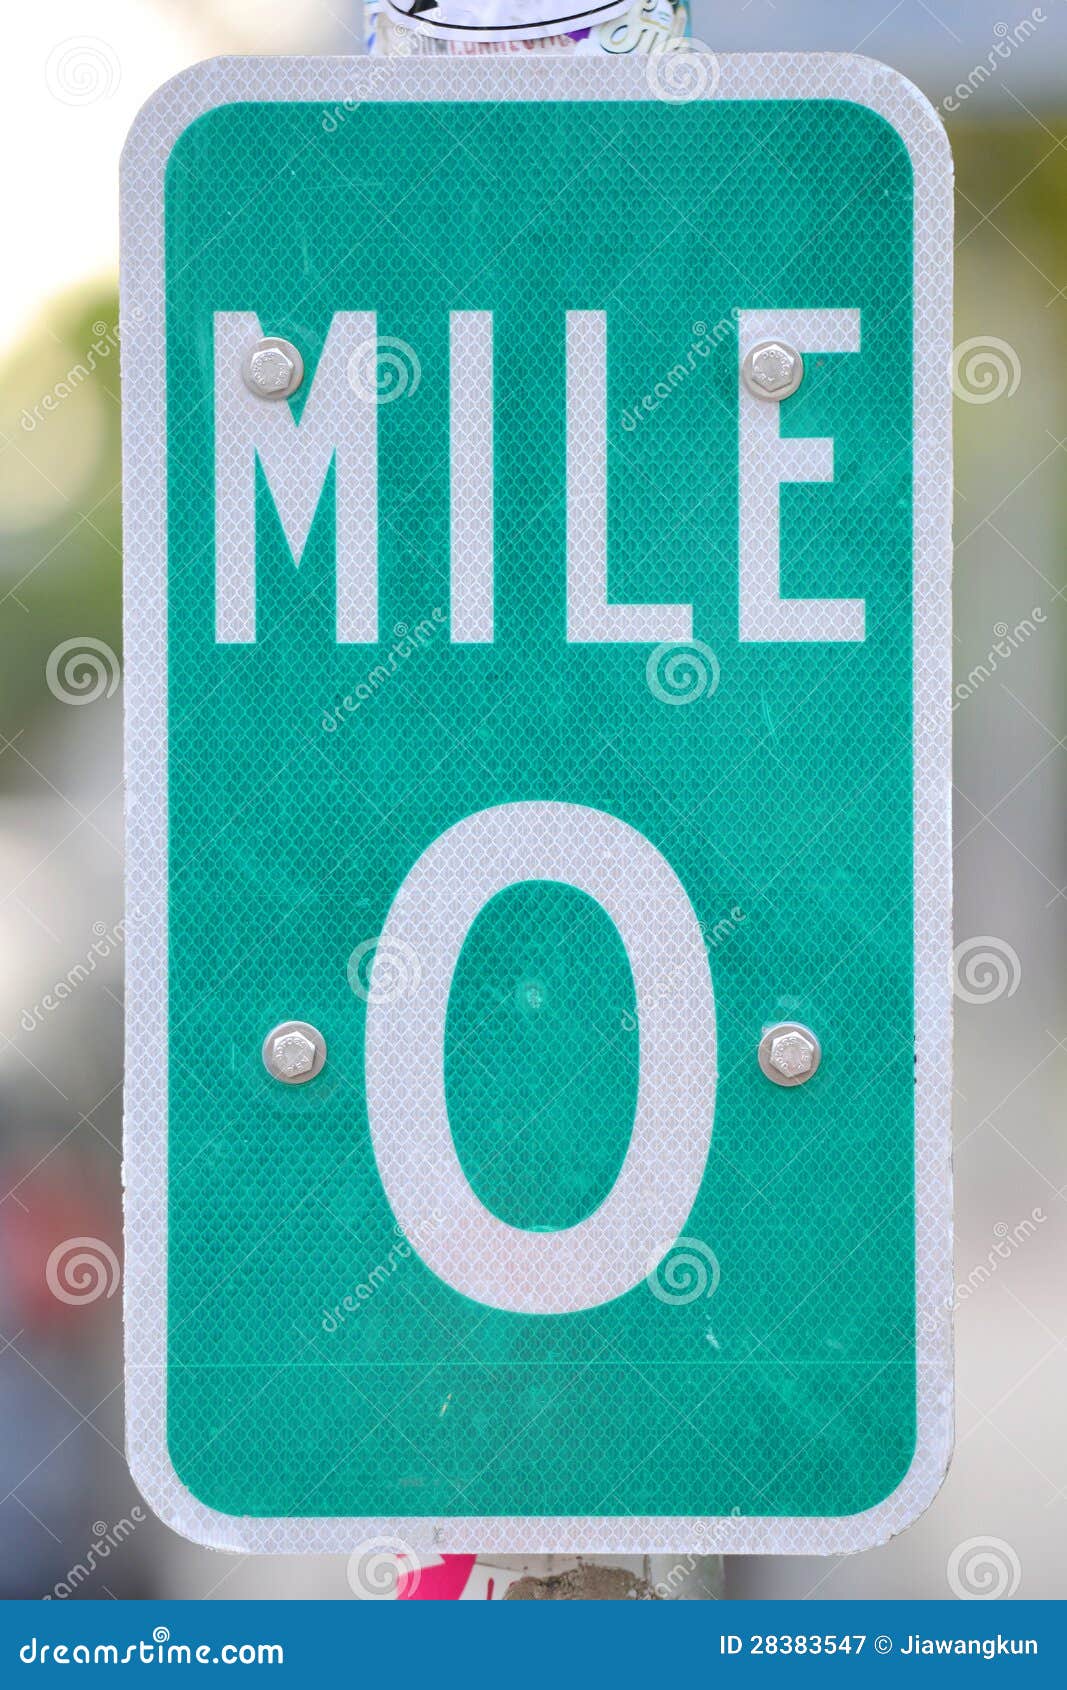 mile zero sign in key west, florida